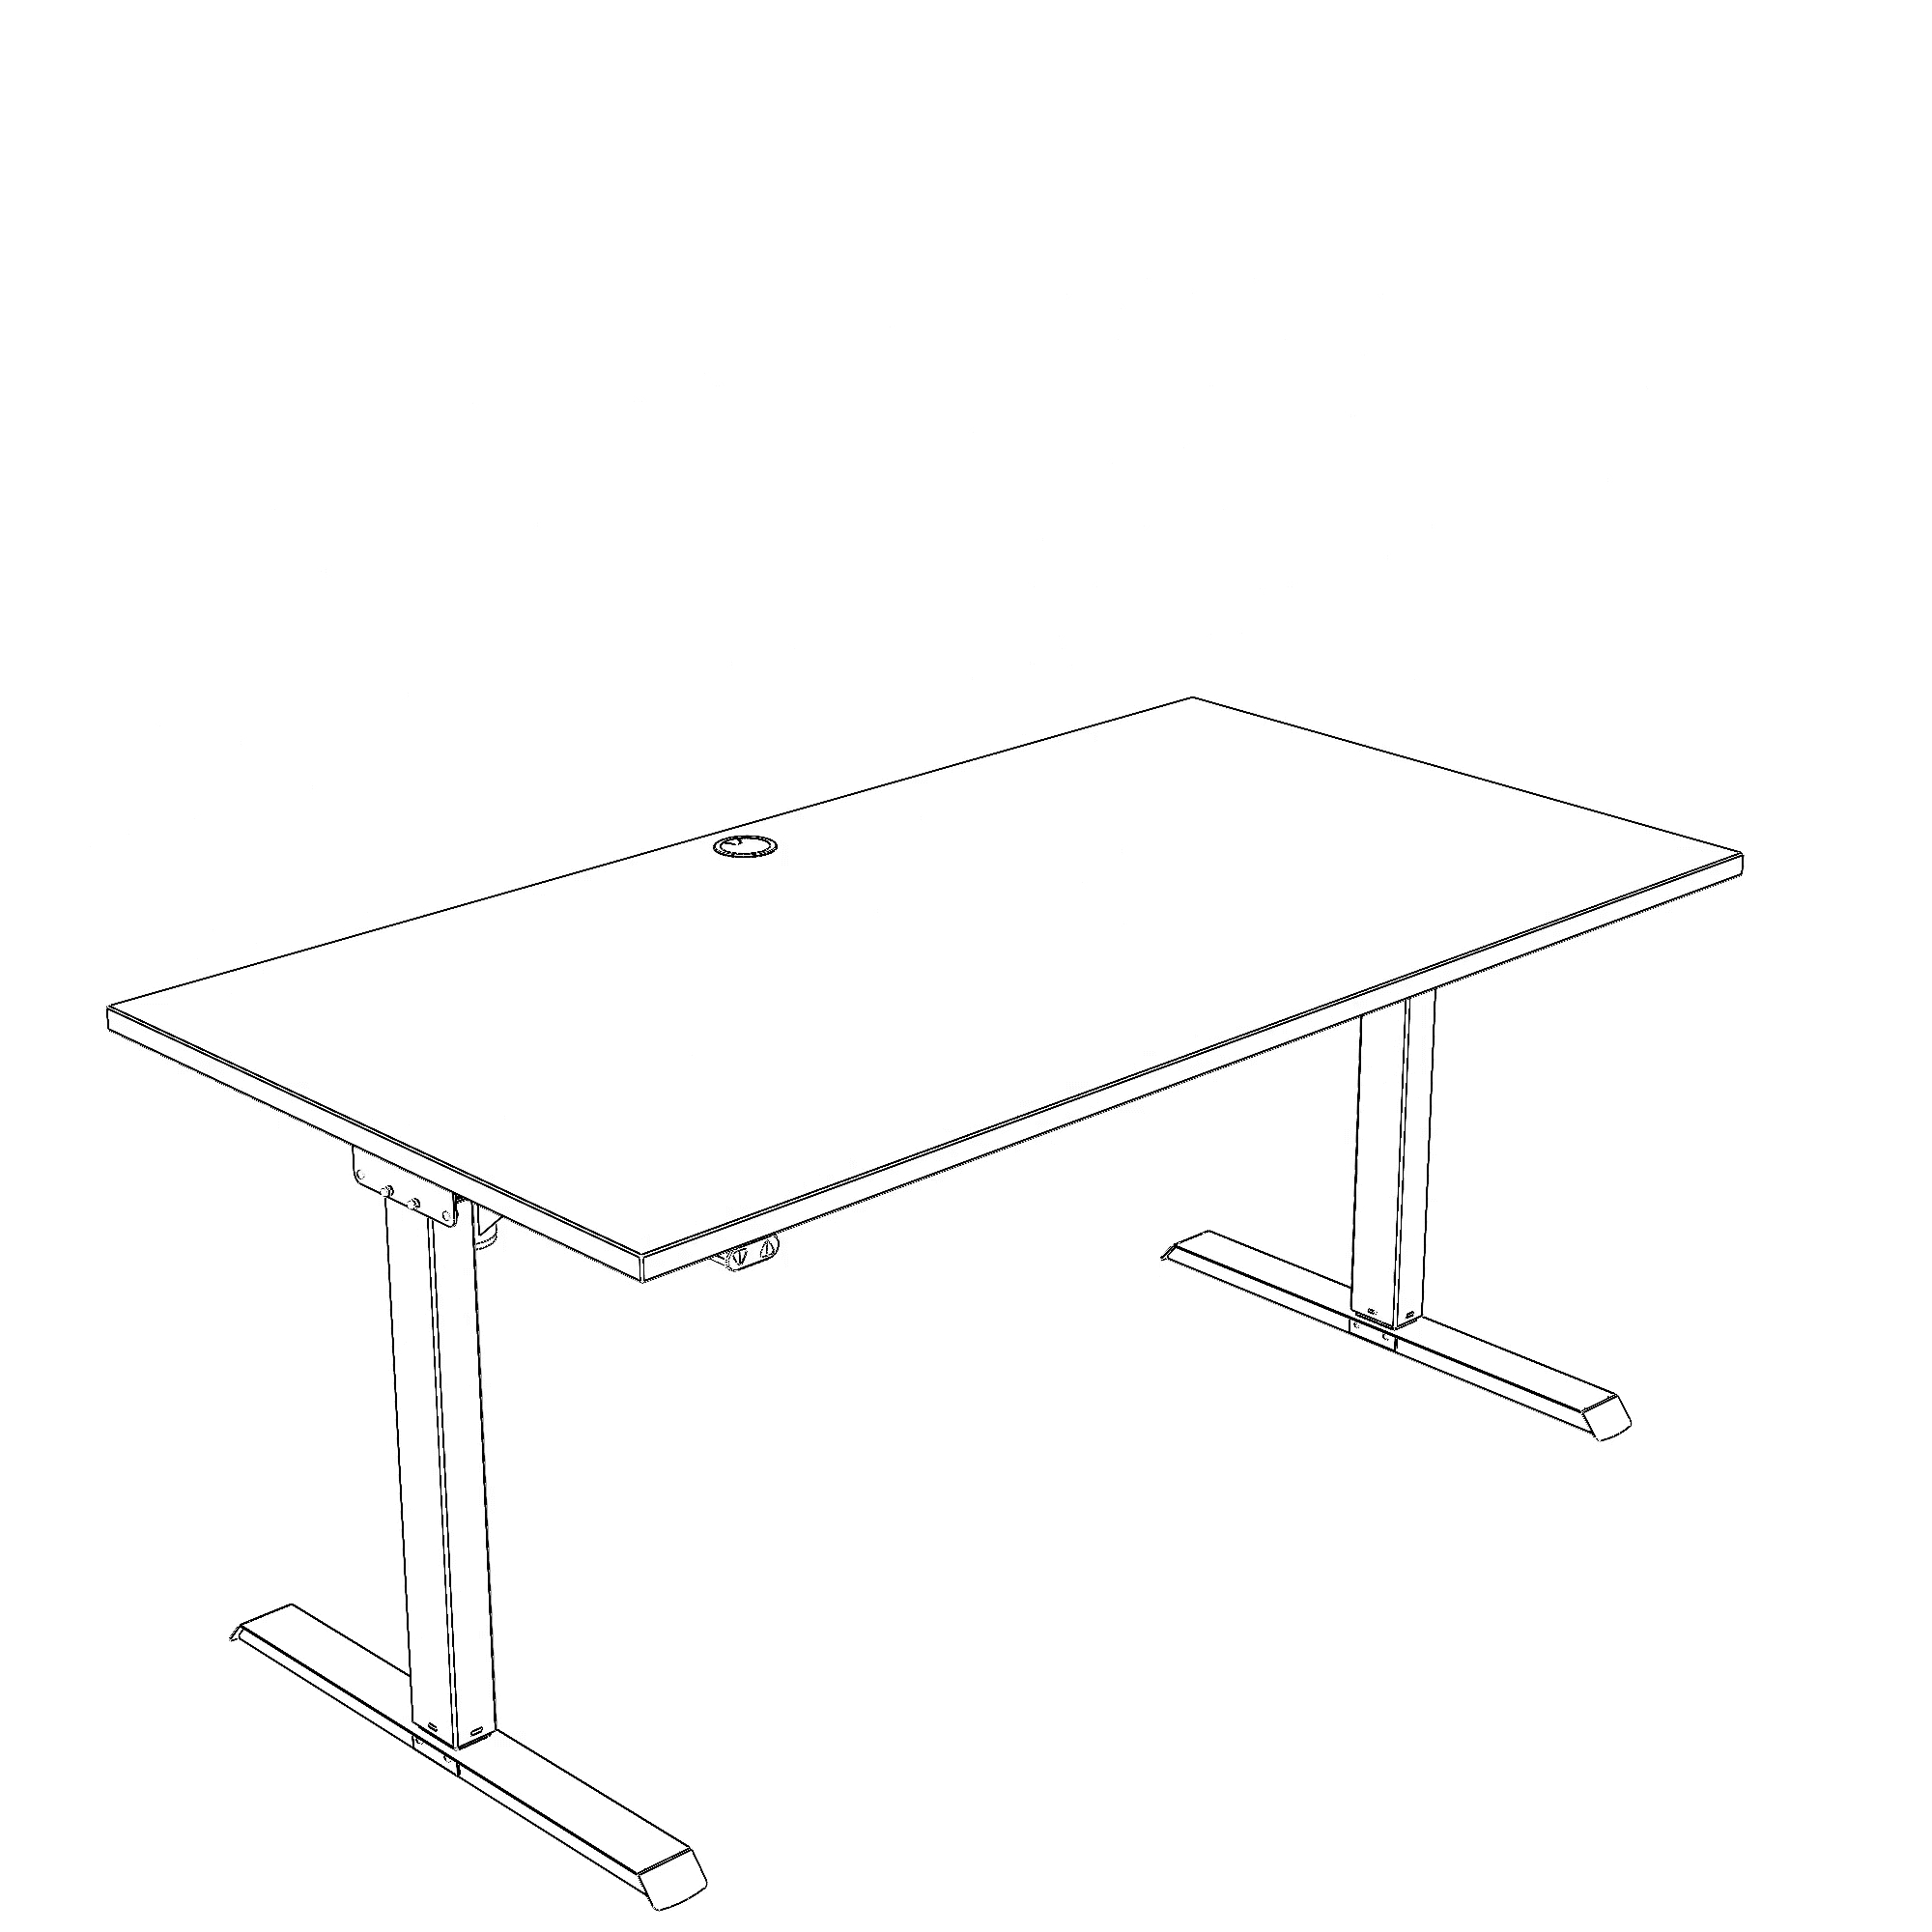 Electric Adjustable Desk | 150x80 cm | Maple with black frame